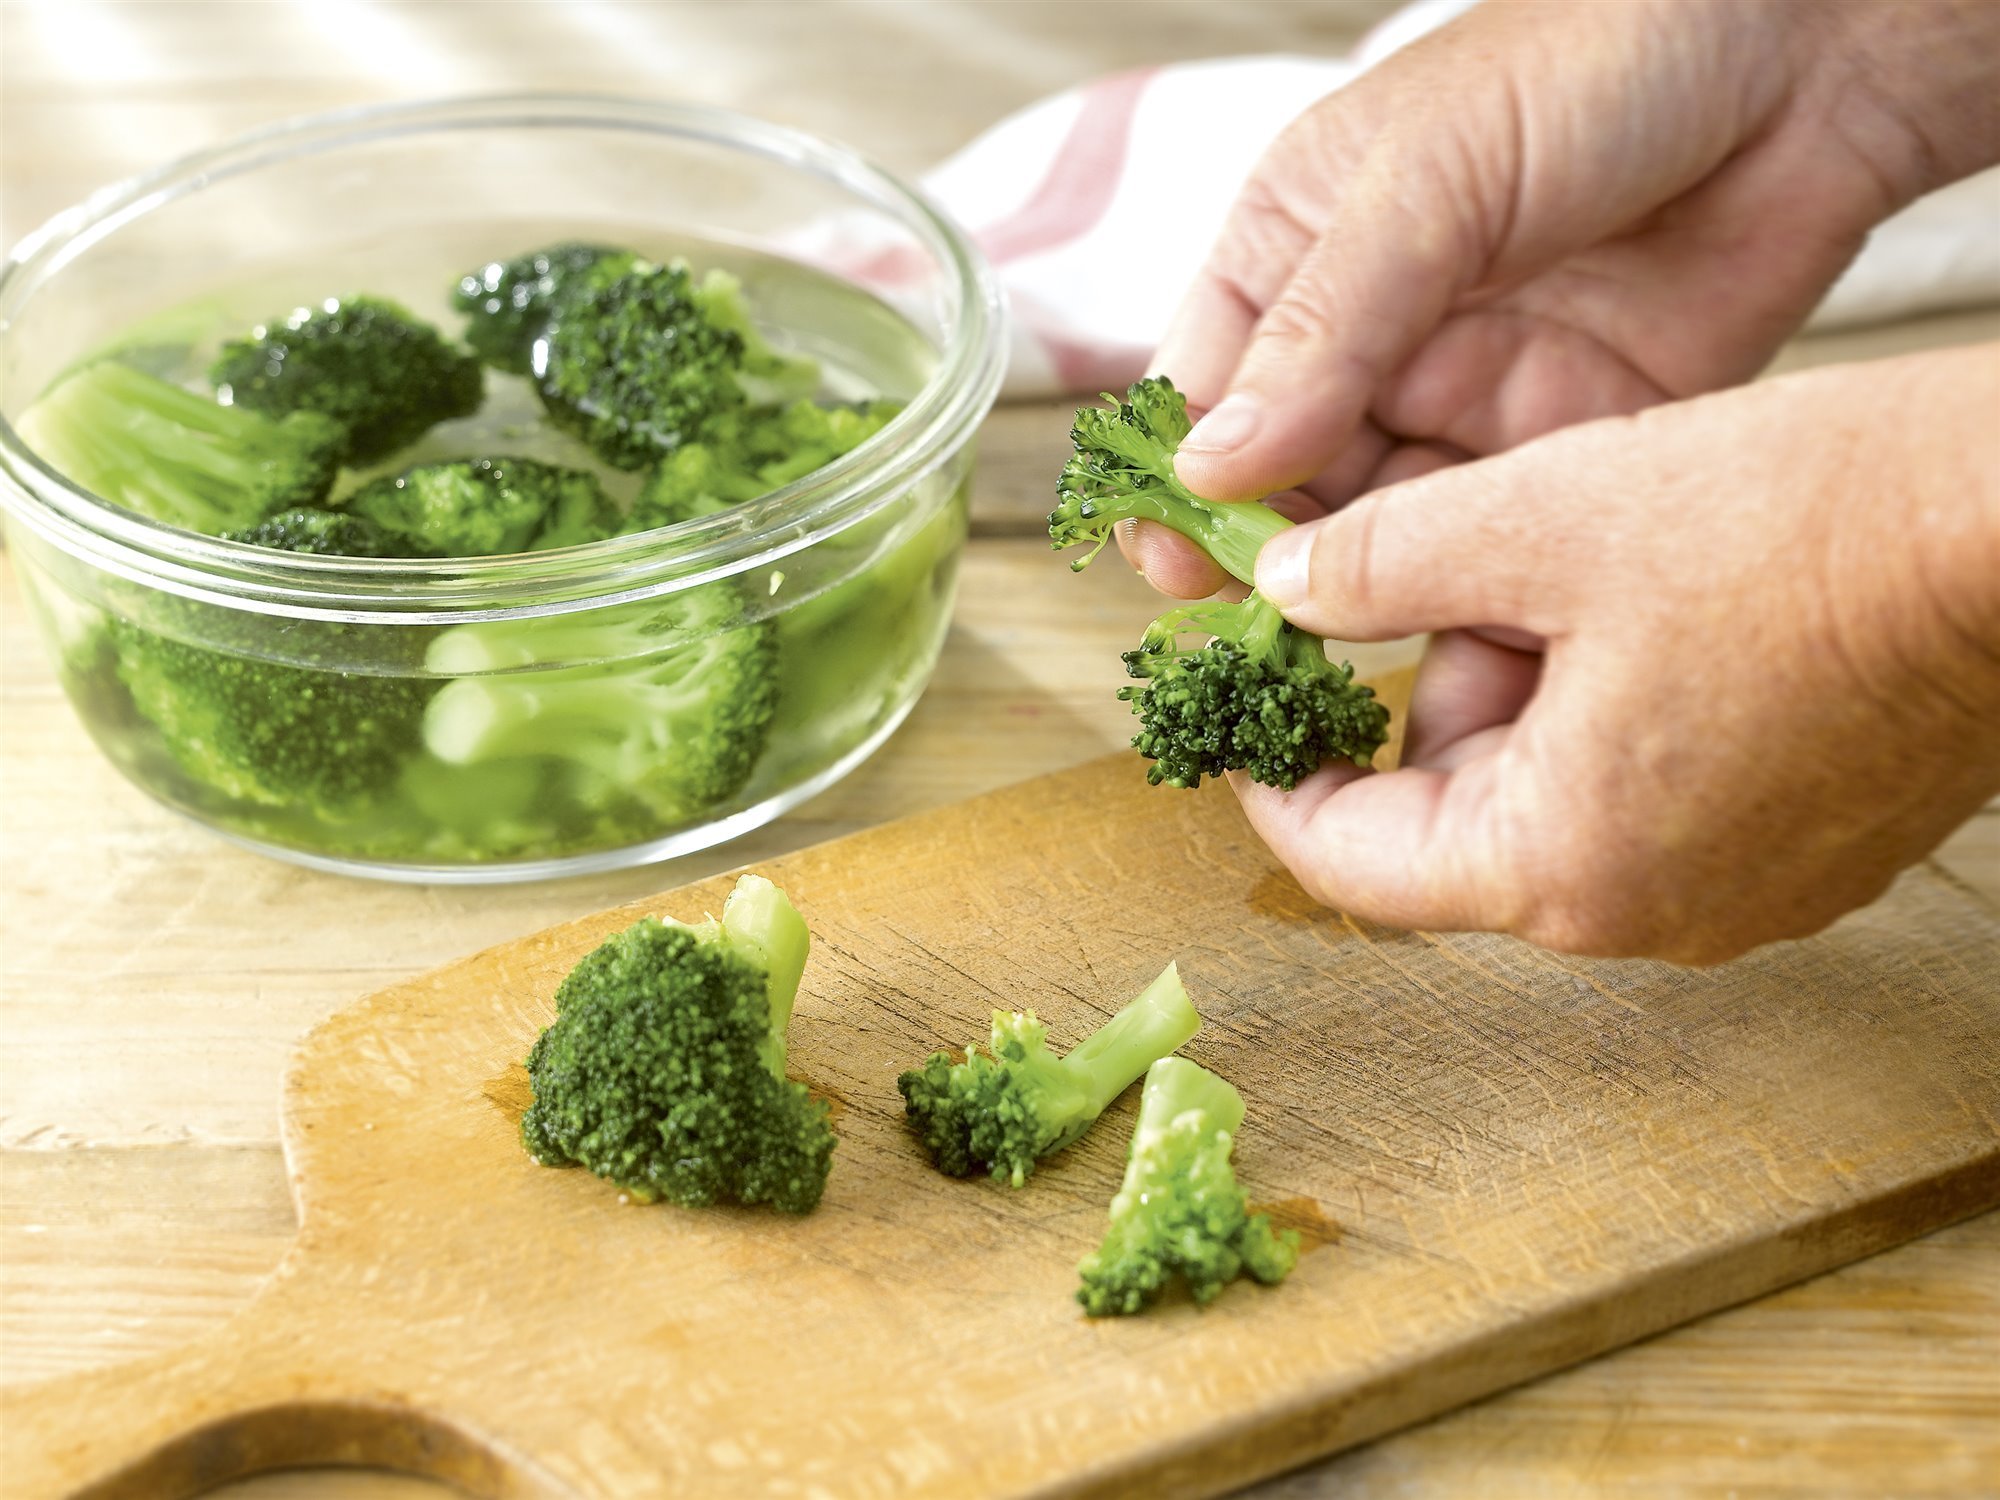 2. Separa ramilletes de brócoli